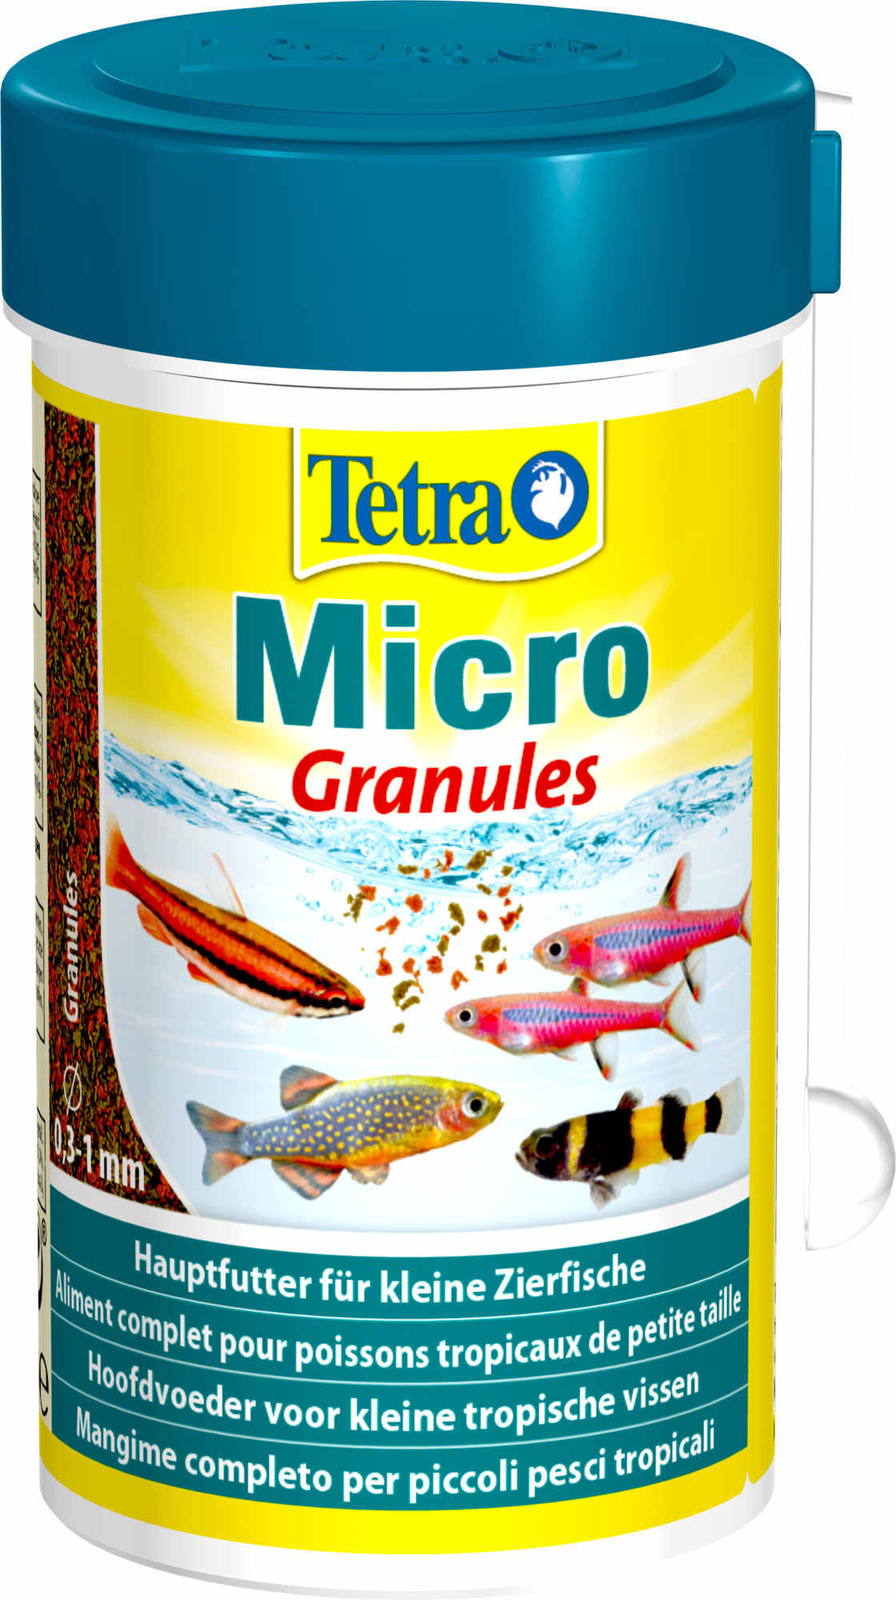 Tetra (корма) Tetra (корма) корм для всех видов мелких рыб, микрогранулы (45 г) tetra корма tetra корма корм для всех видов крупных рыб крупные гранулы 82 г